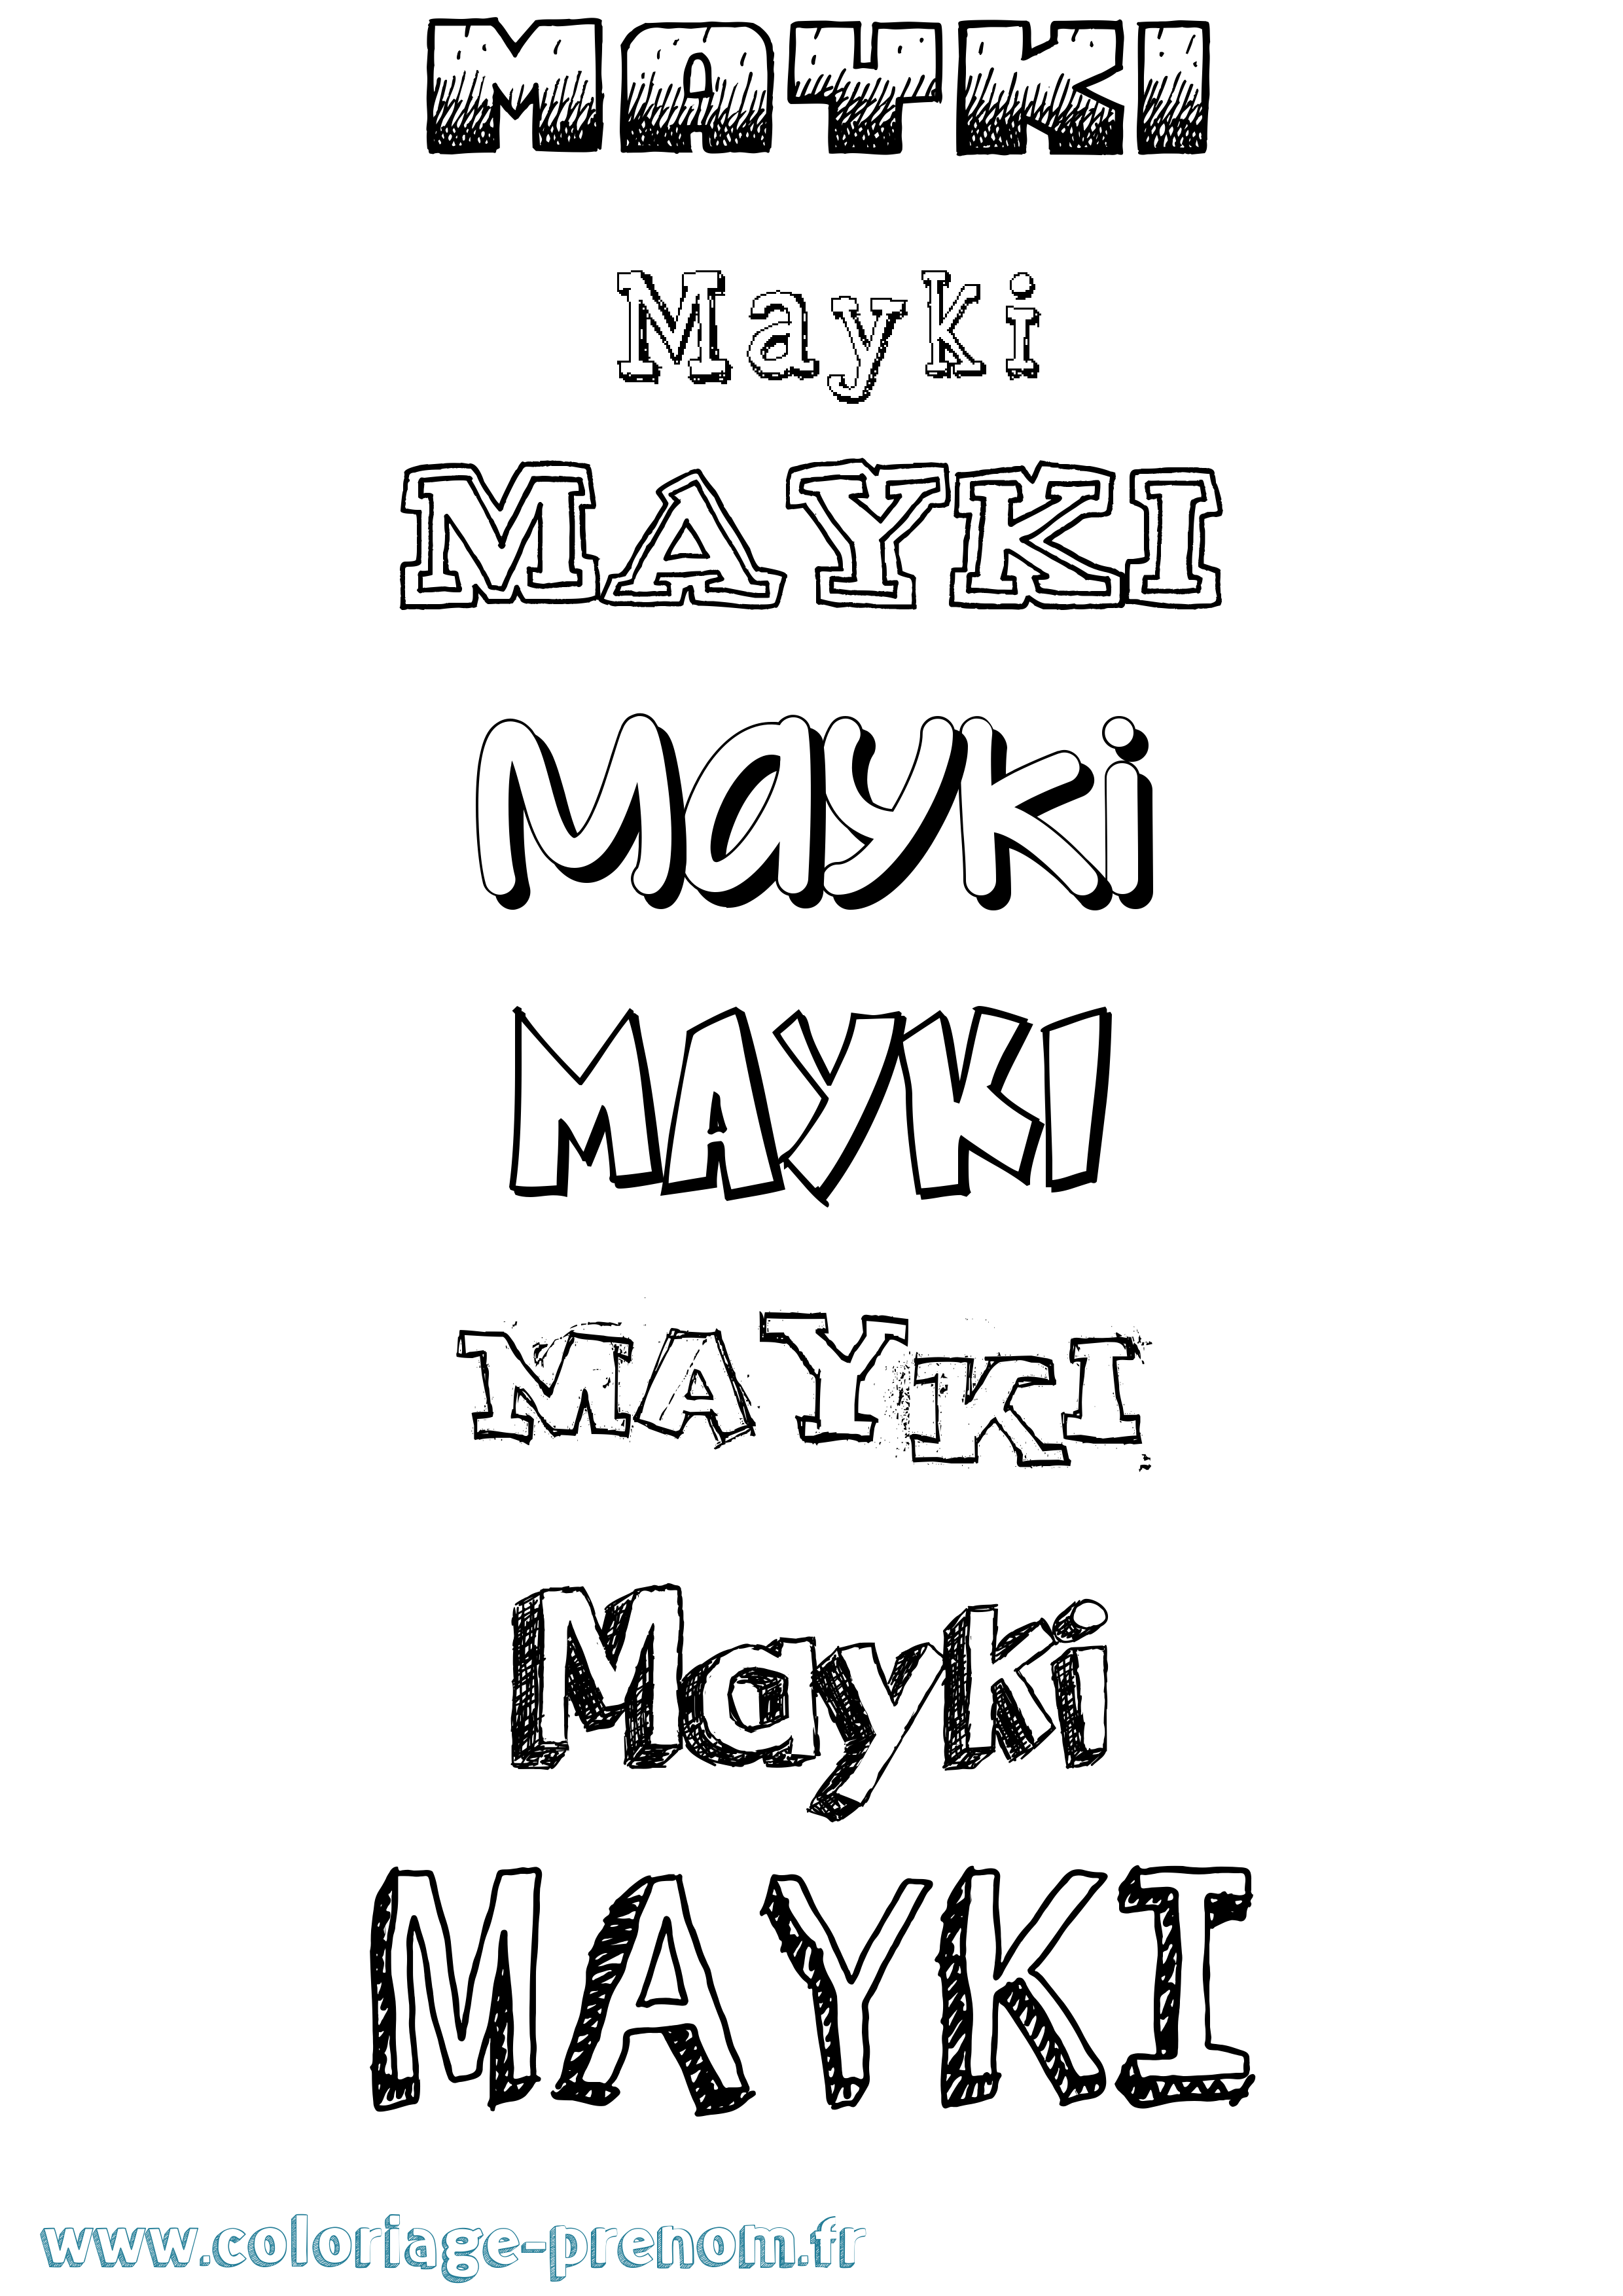 Coloriage prénom Mayki Dessiné